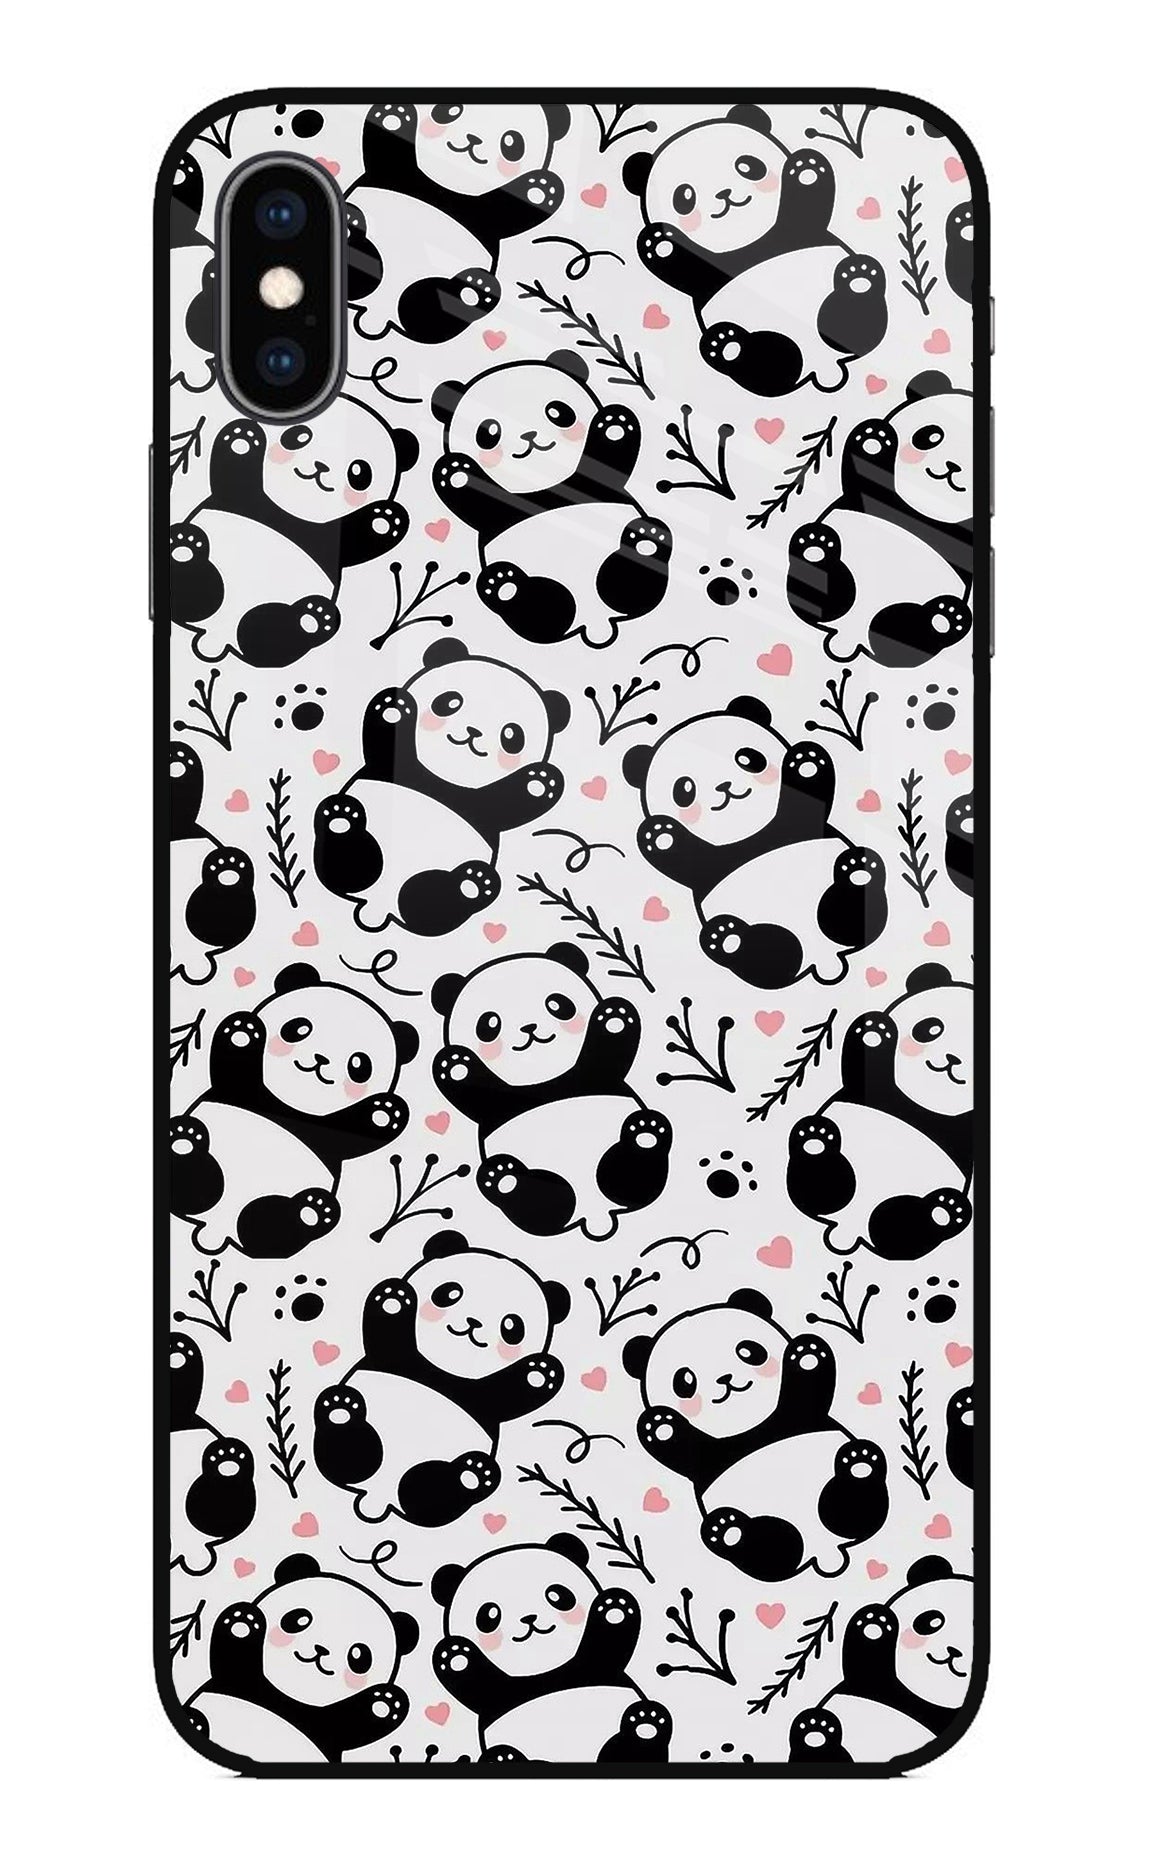 Cute Panda iPhone XS Max Back Cover